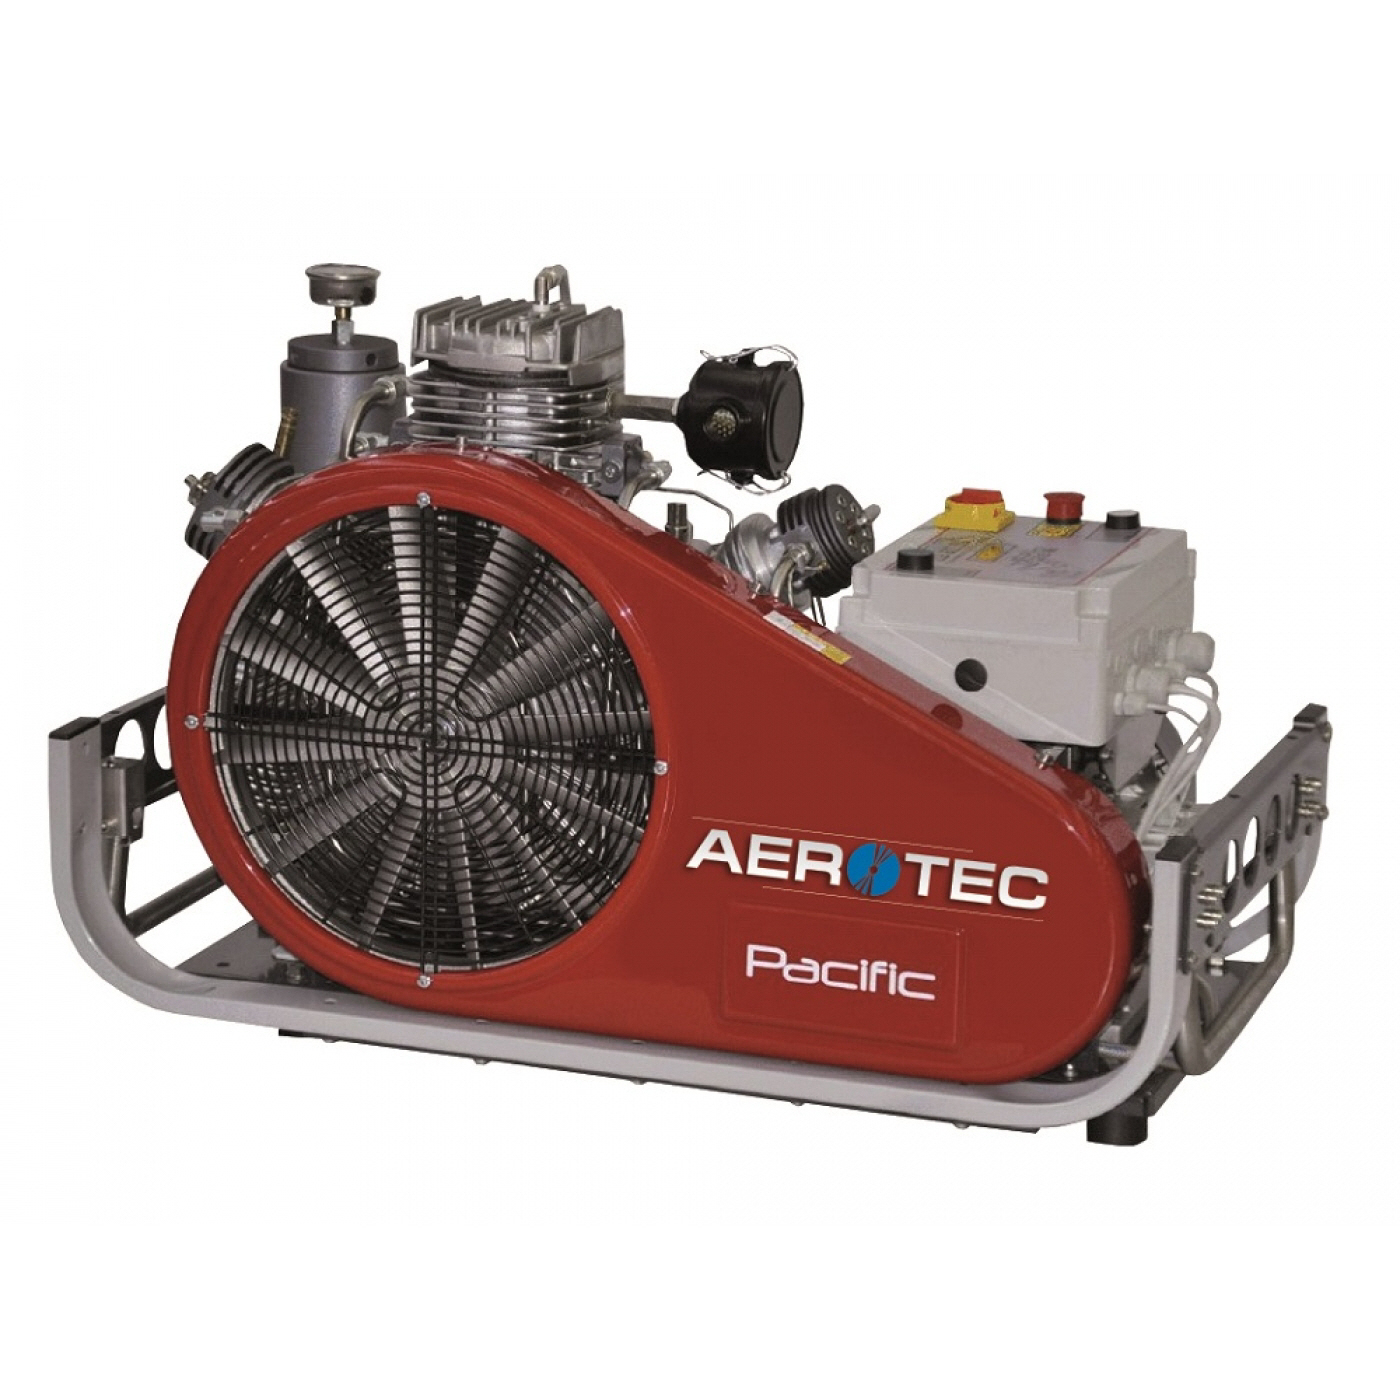 AEROTEC Kolbenkompressor PACIFIC E 35 - 225 bar Tauchkompressoren